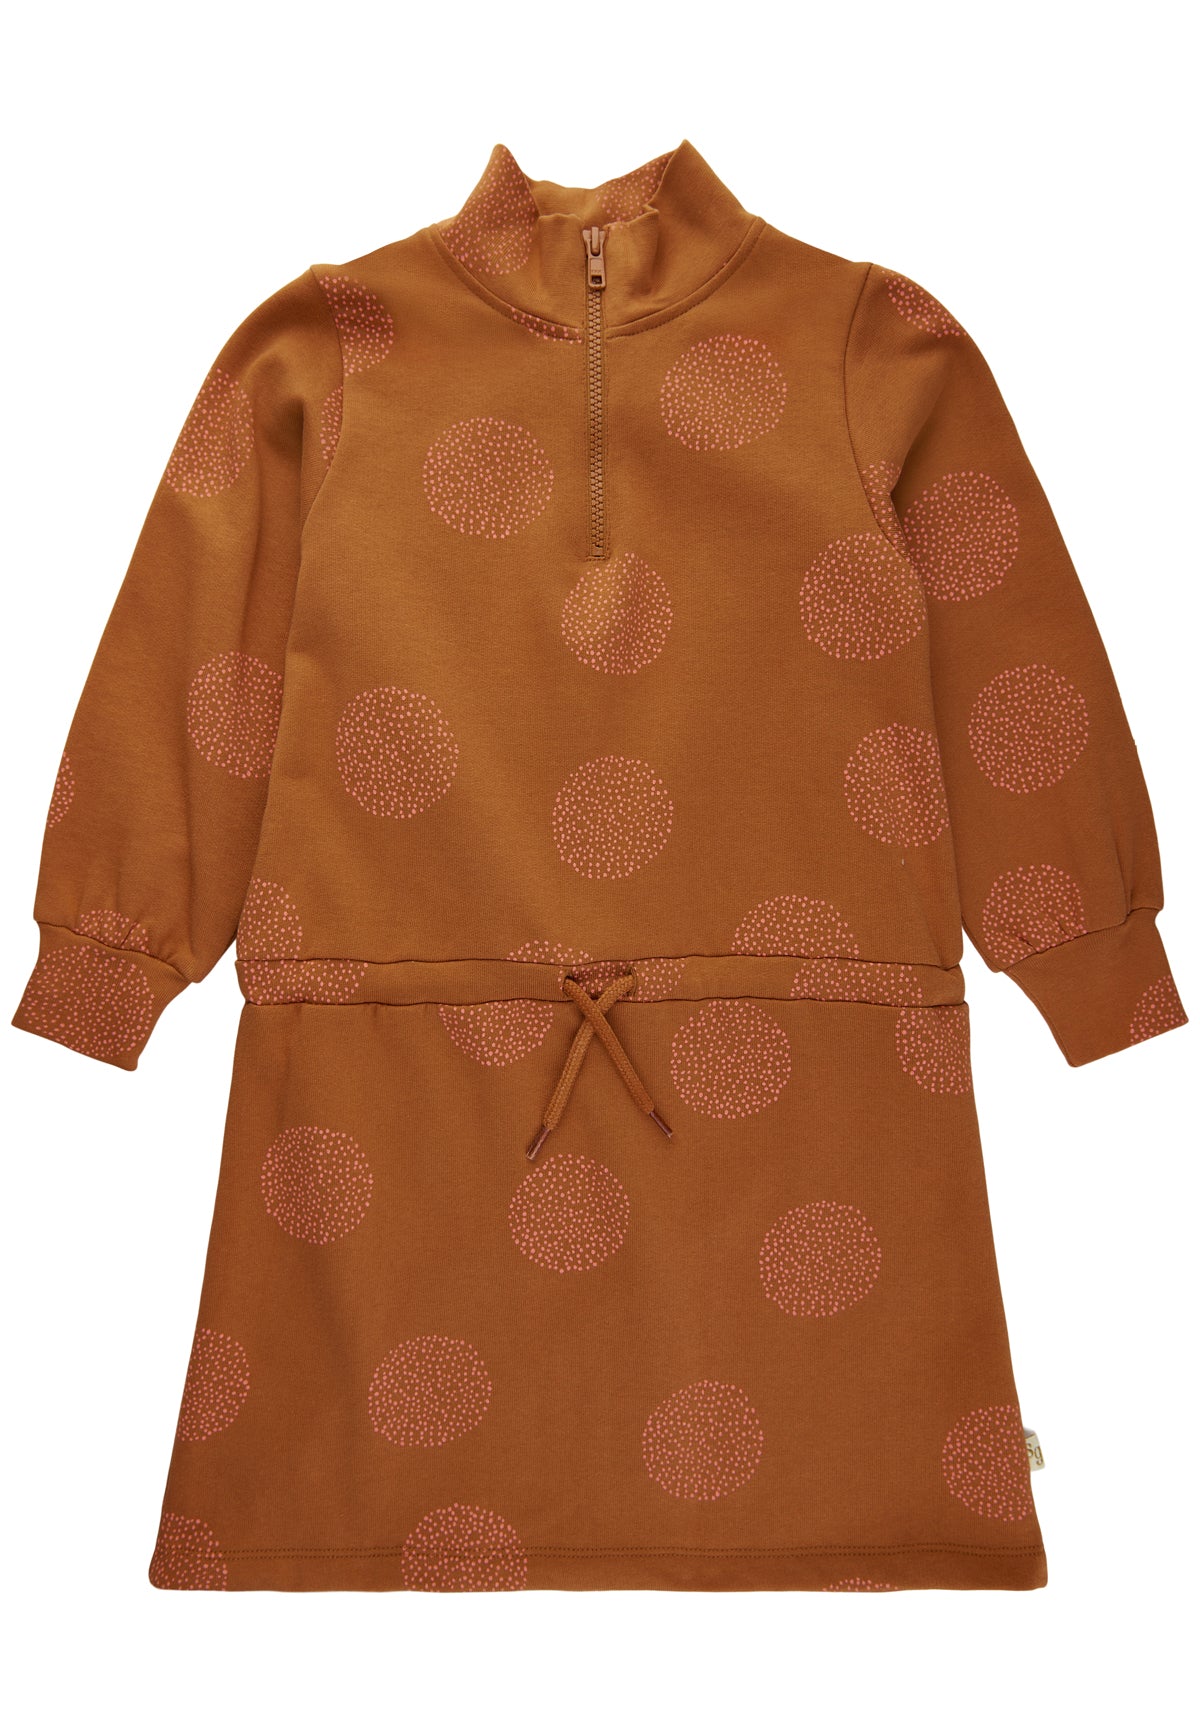 Soft Gallery - Kiera Moondots Dress - Glazed Ginger